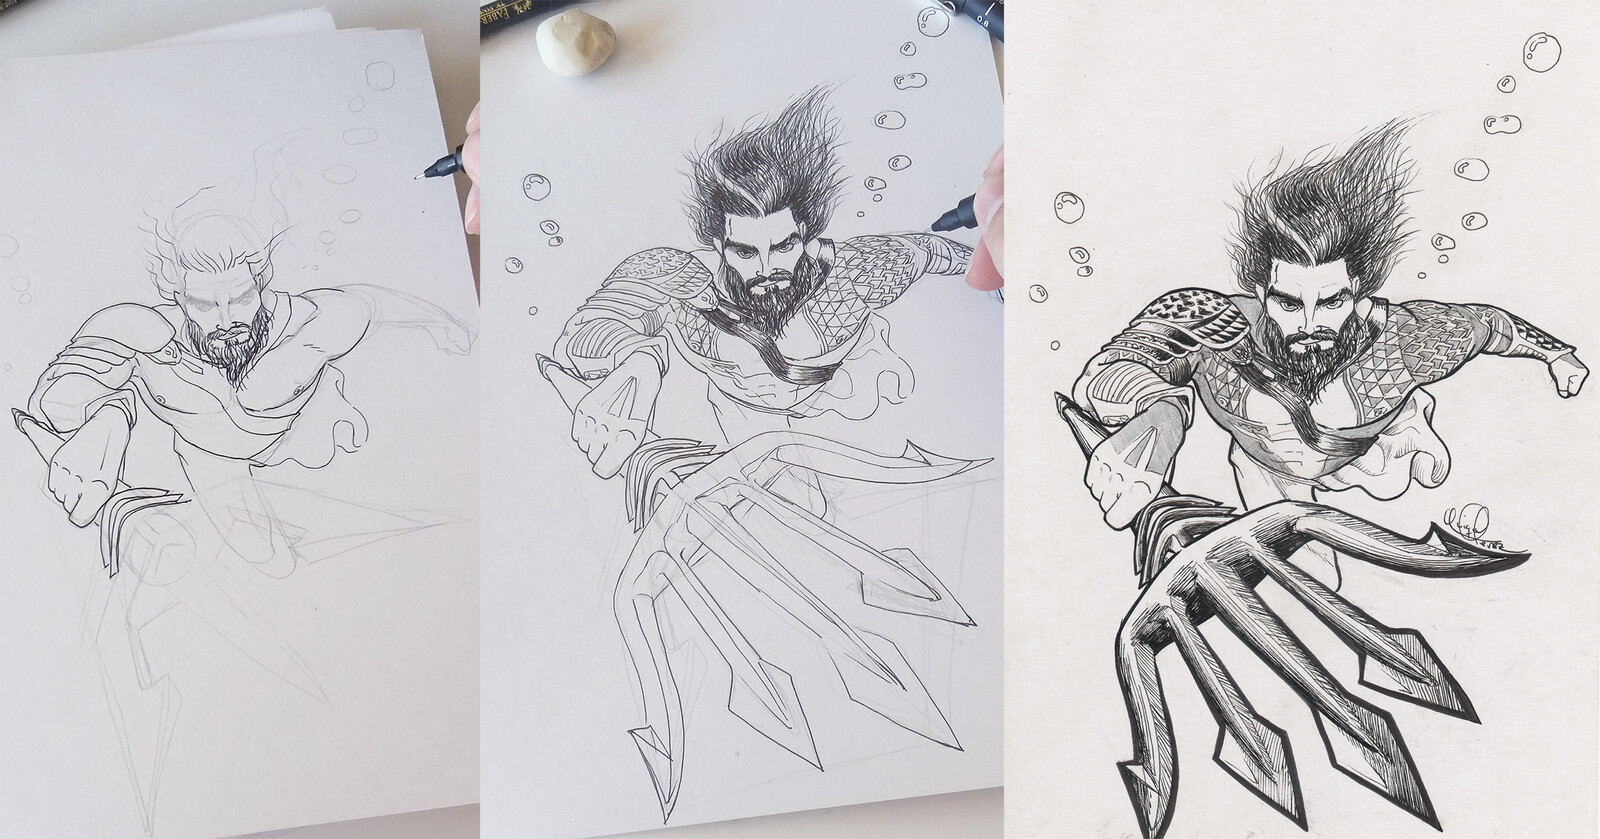 Jason Momoa's Aquaman process drawing (2018)